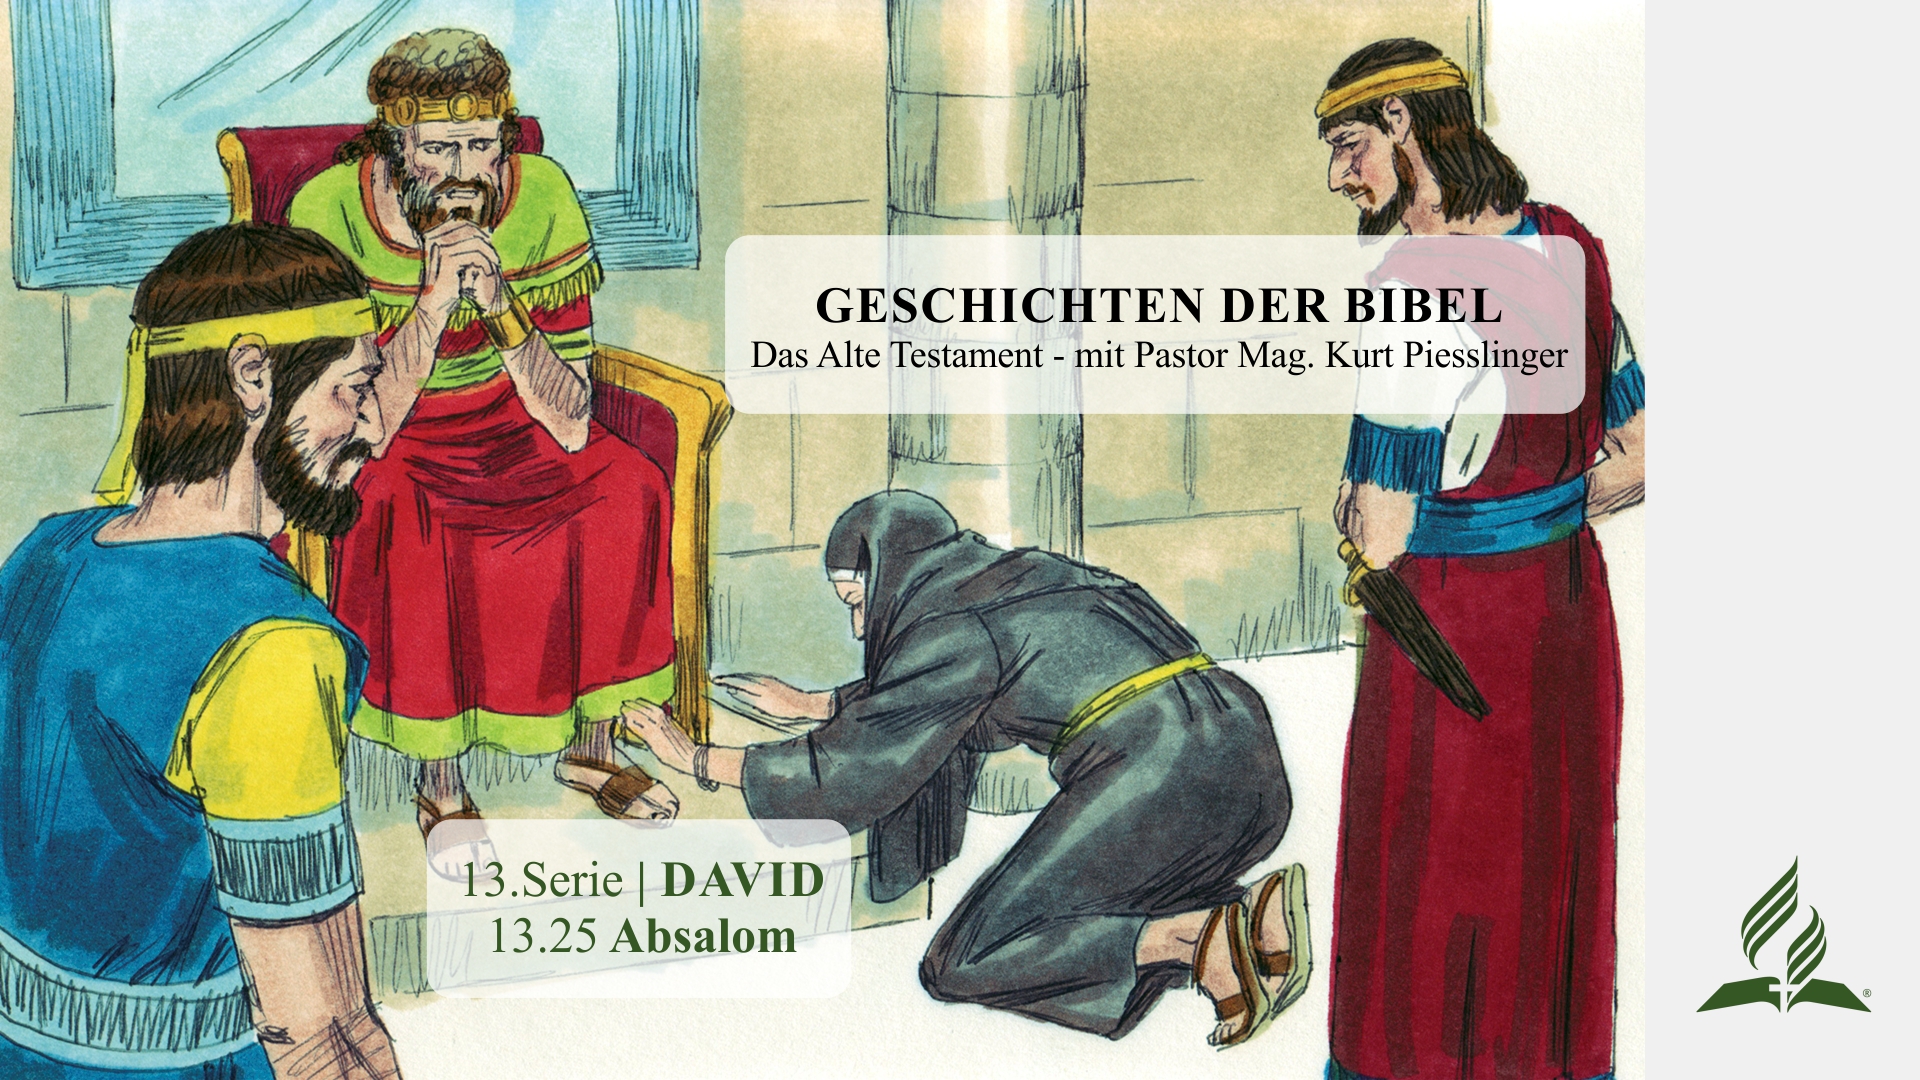 GESCHICHTEN DER BIBEL: 13.25 Absalom – 13.DAVID | Pastor Mag. Kurt Piesslinger